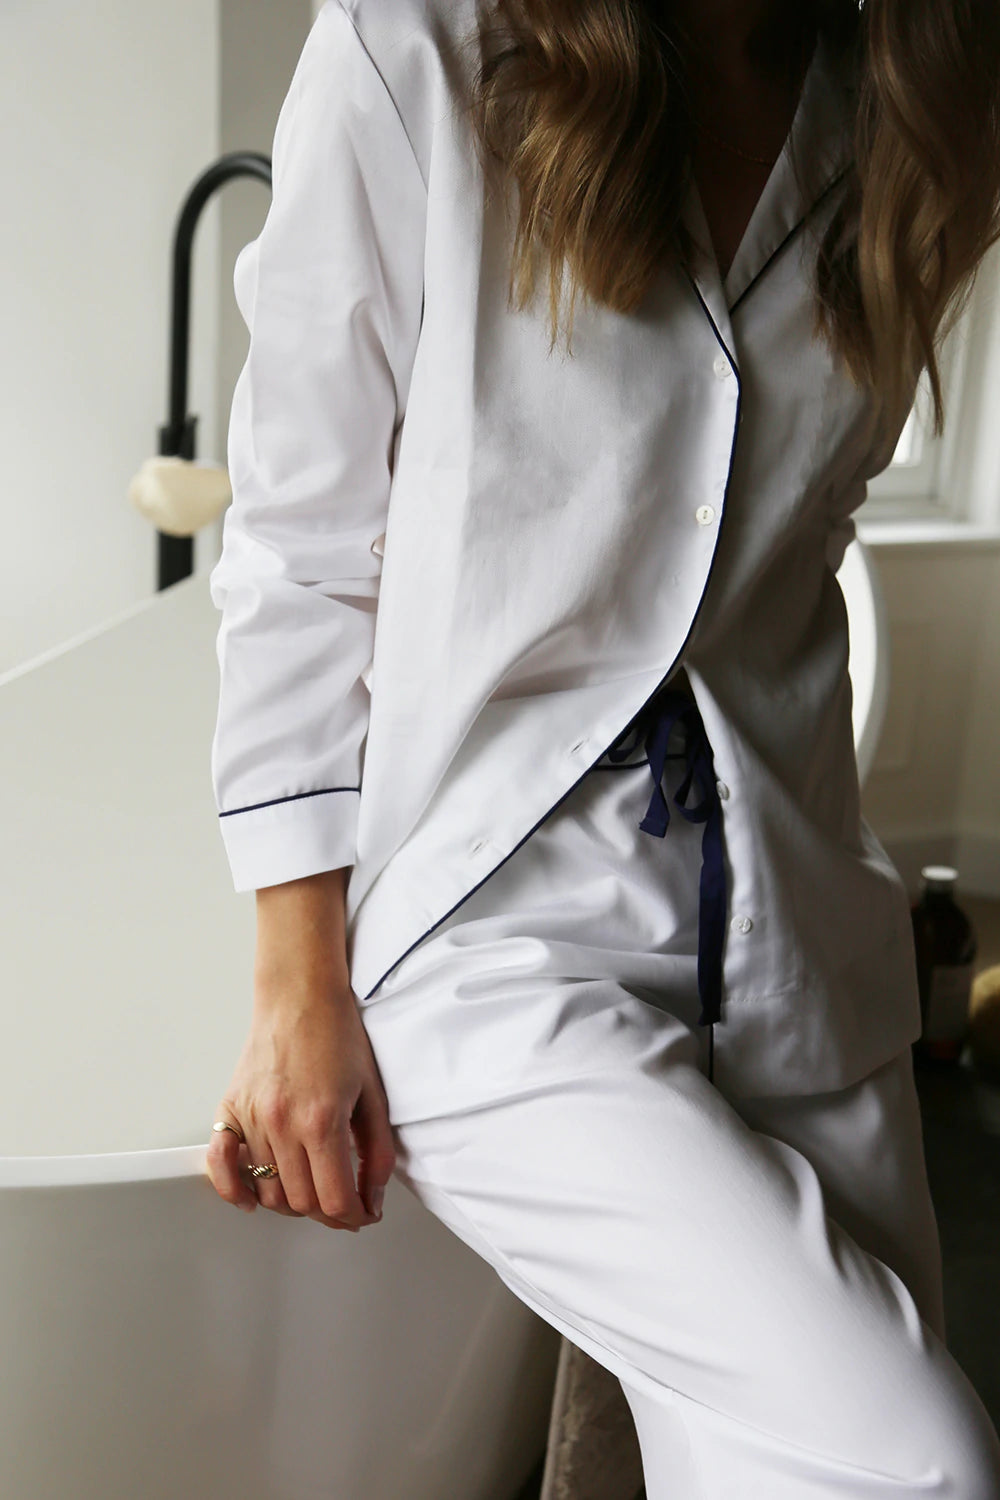 A woman in BREATHE organic cotton pyjamas, specifically the Herringbone White organic cotton pyjama set, leaning against a bathtub.